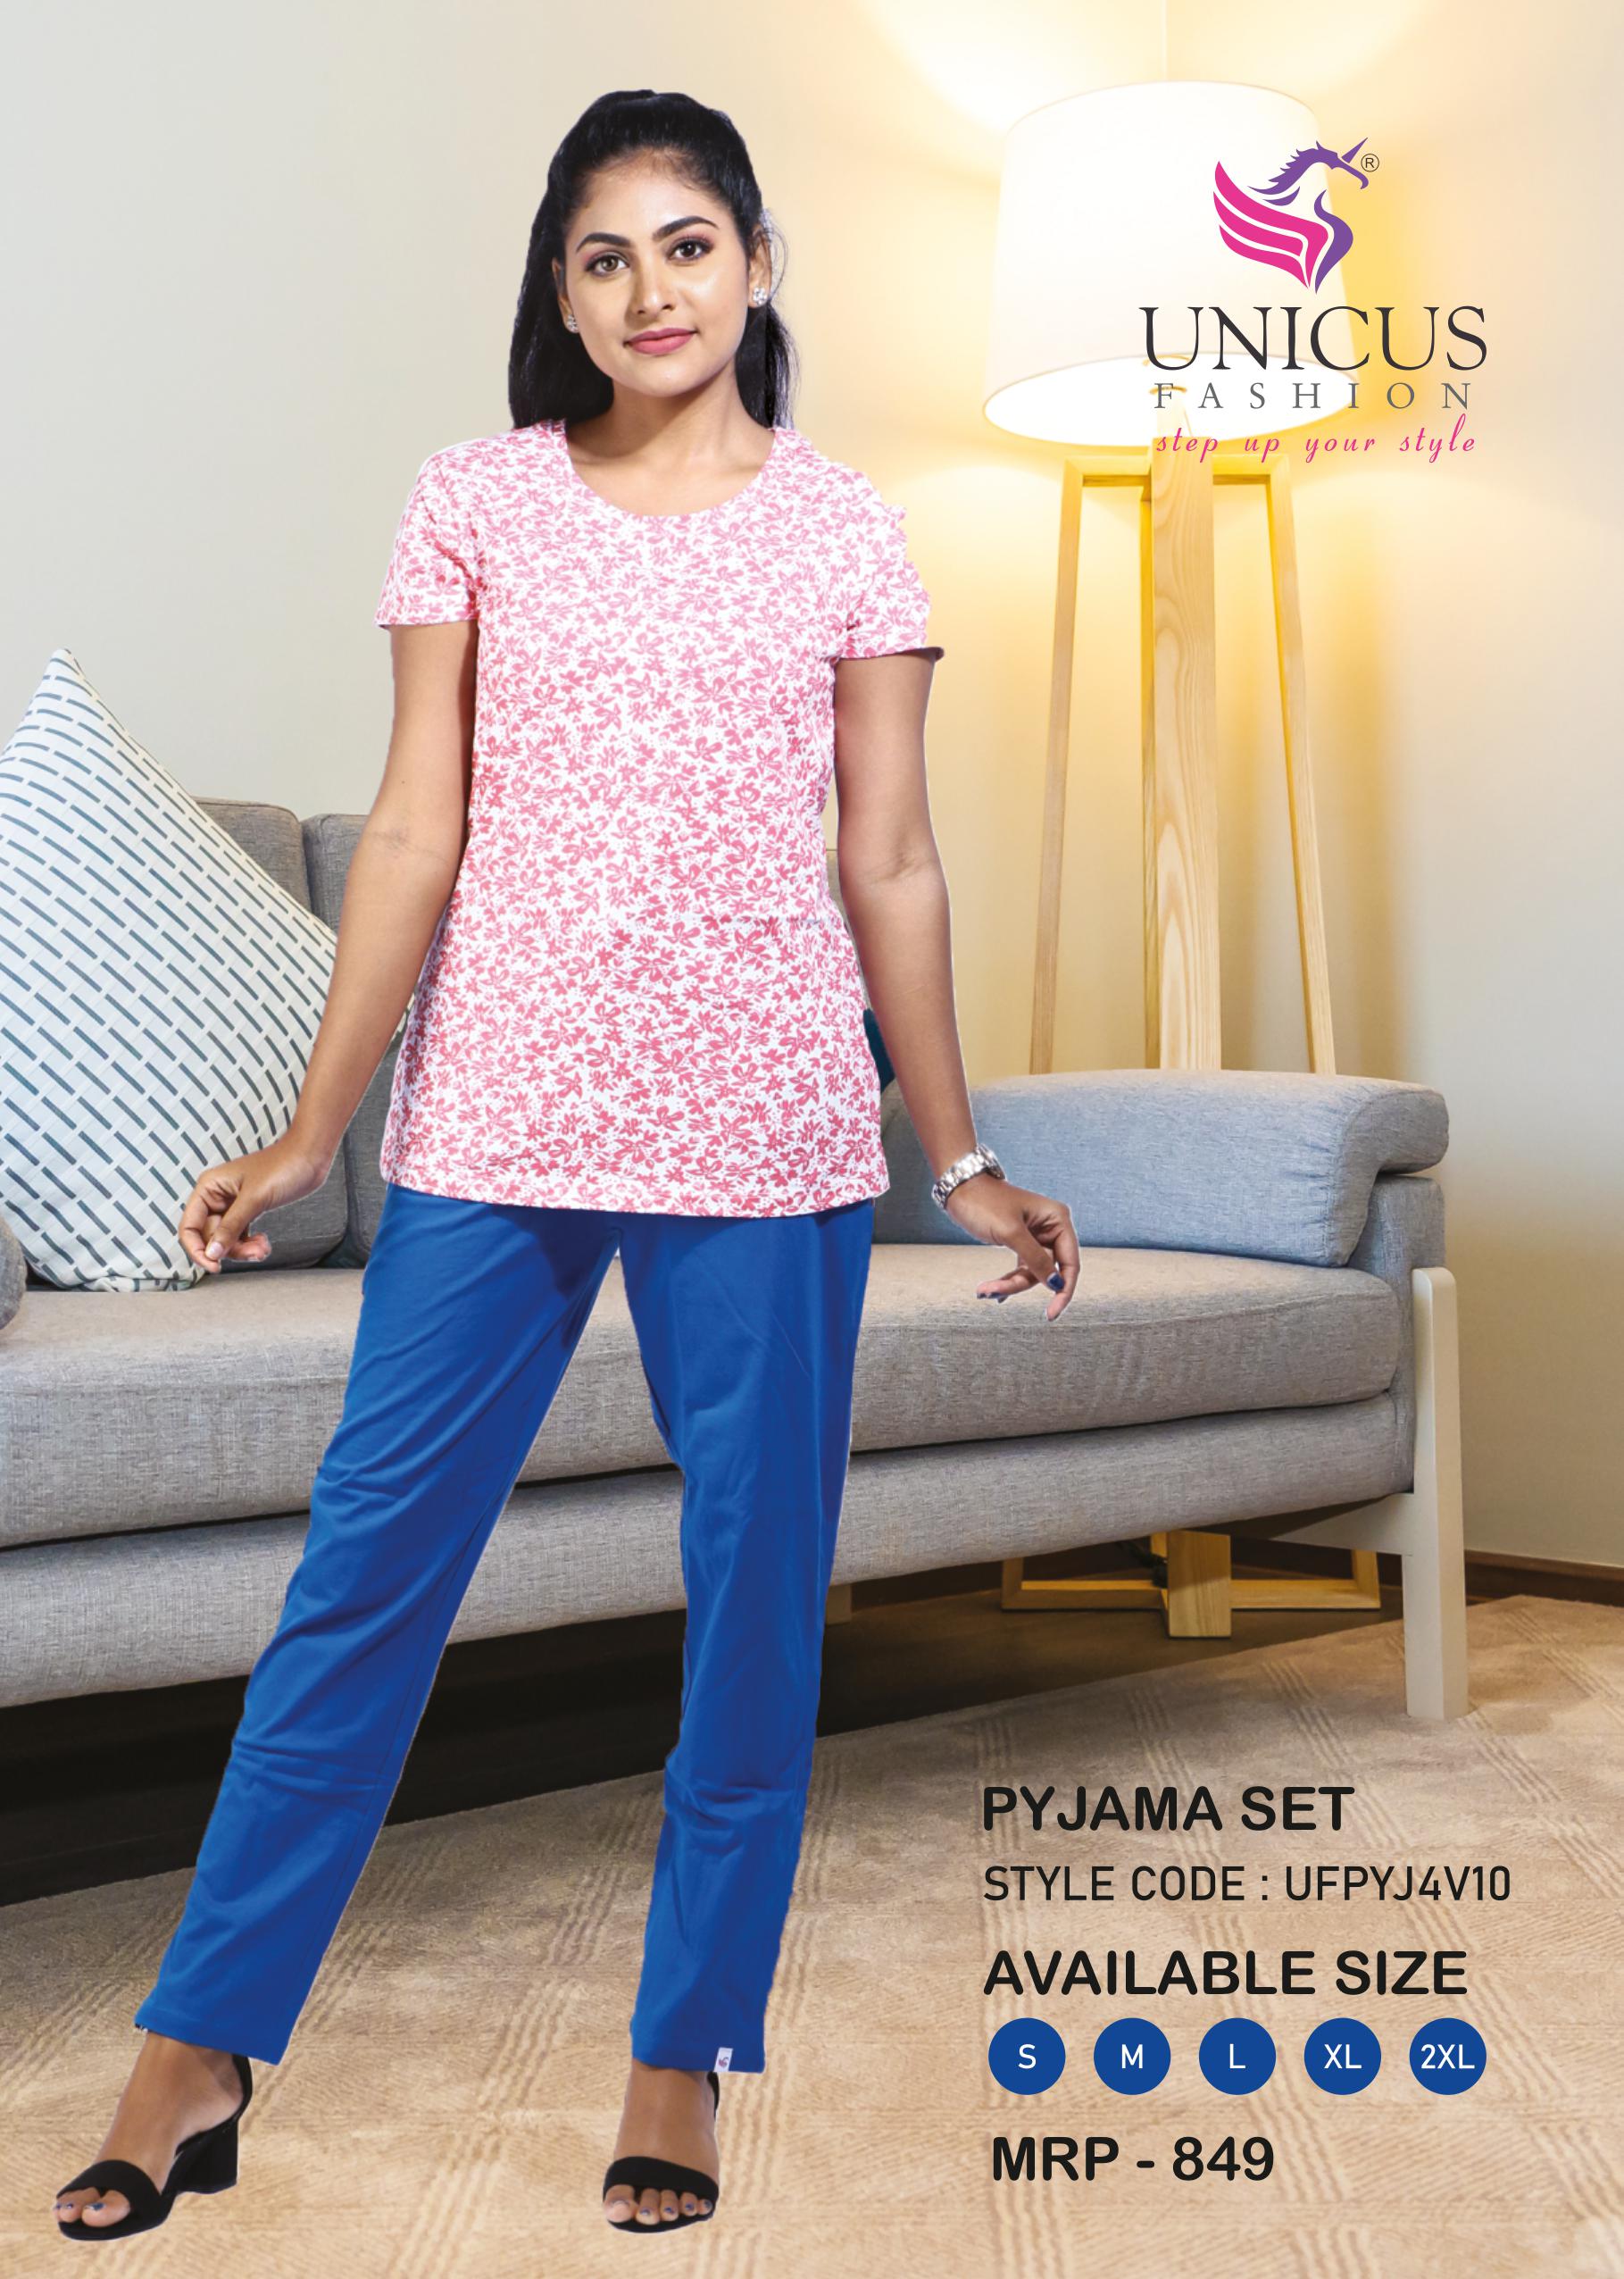 PYJAMA SET For Women from Unicus Fashion